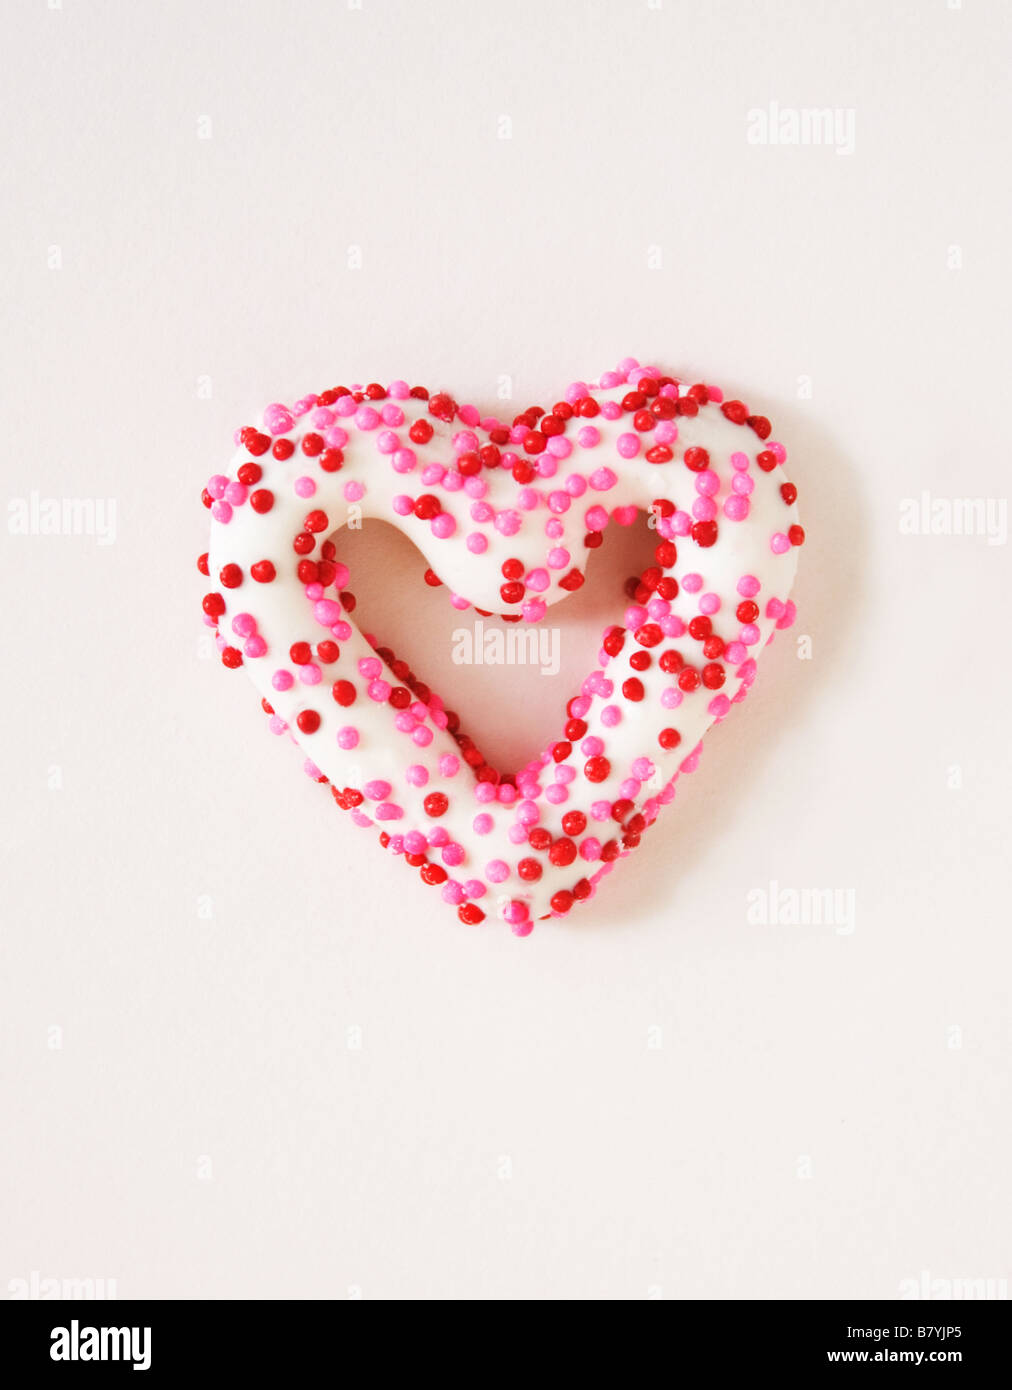 Single Valentine candy heart pretzel on a white background. Stock Photo